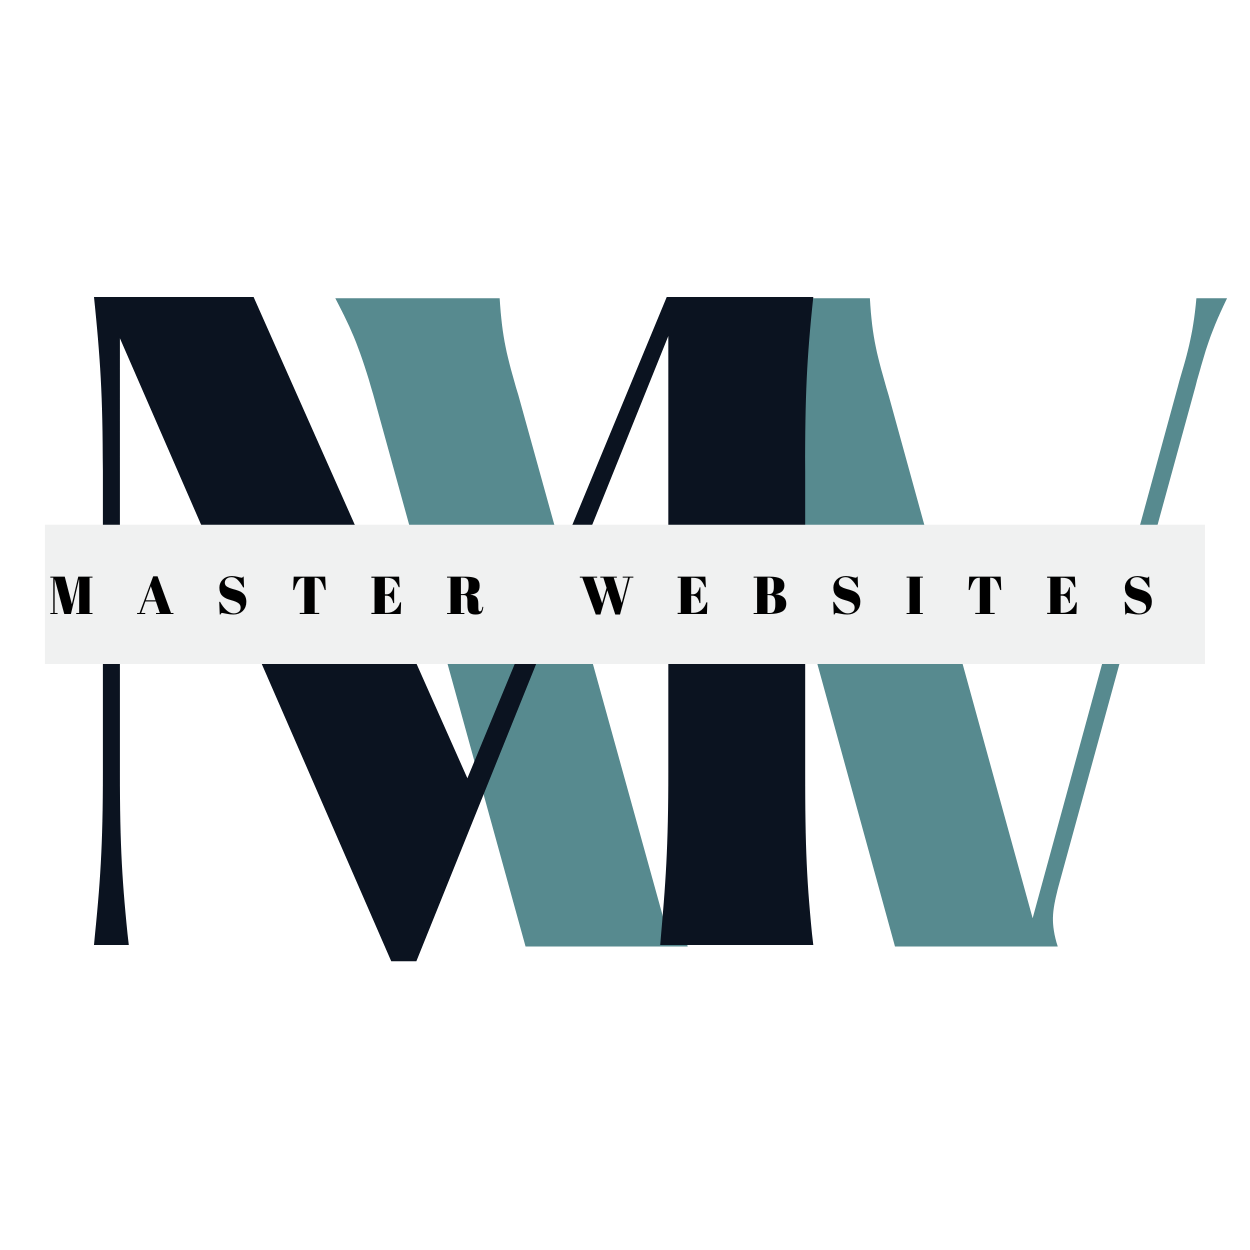 Masterswebsitestudios.com